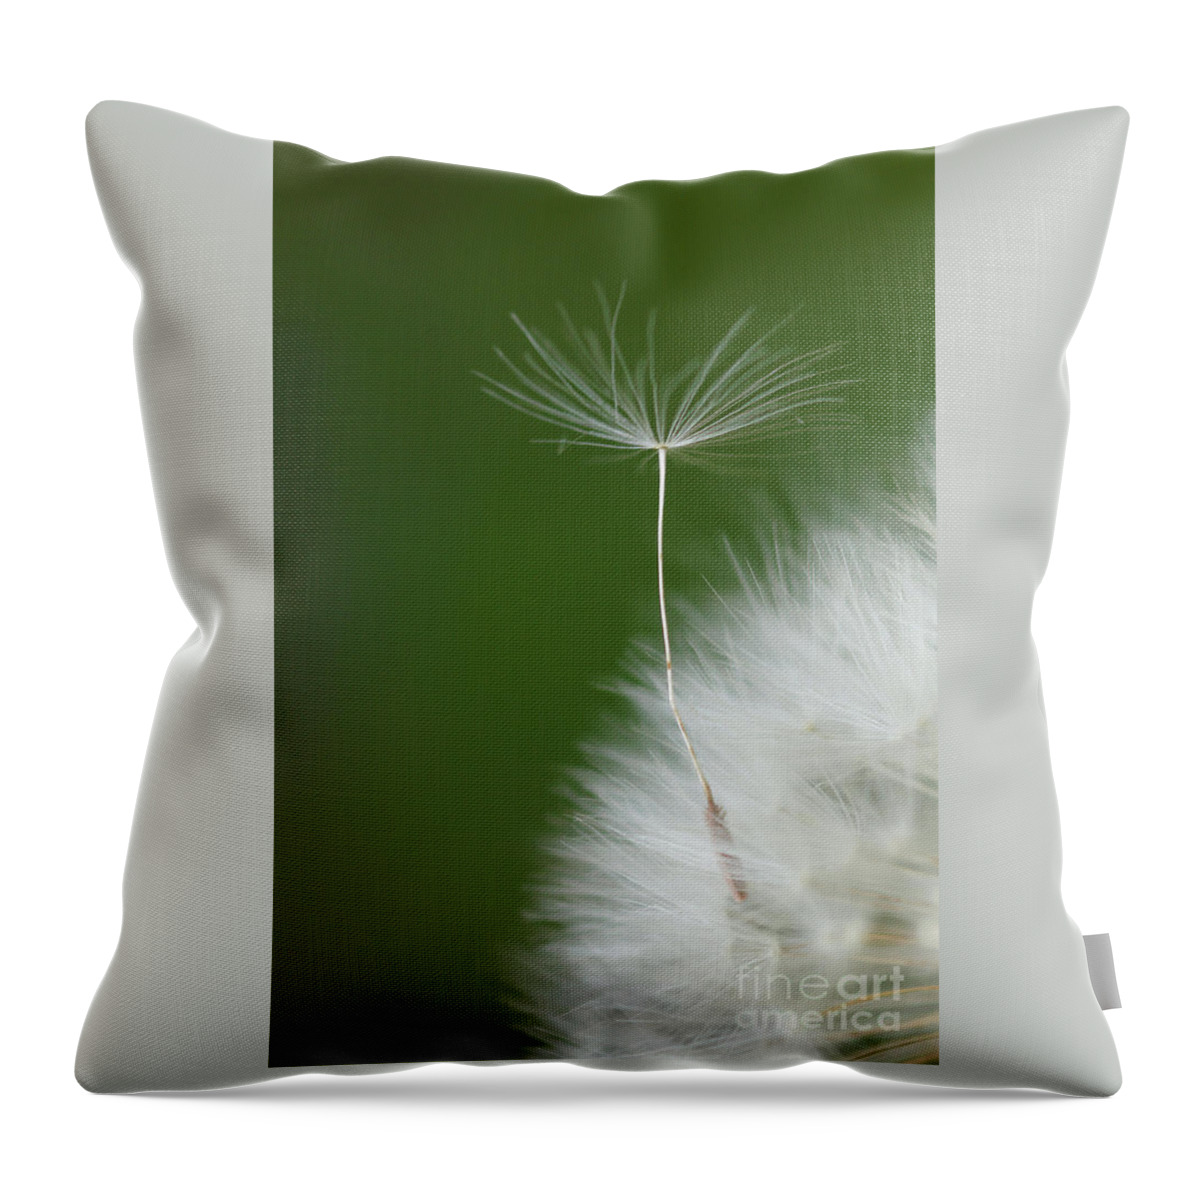 Flower Throw Pillow featuring the photograph Wind by Elbegzaya Lkhagvasuren